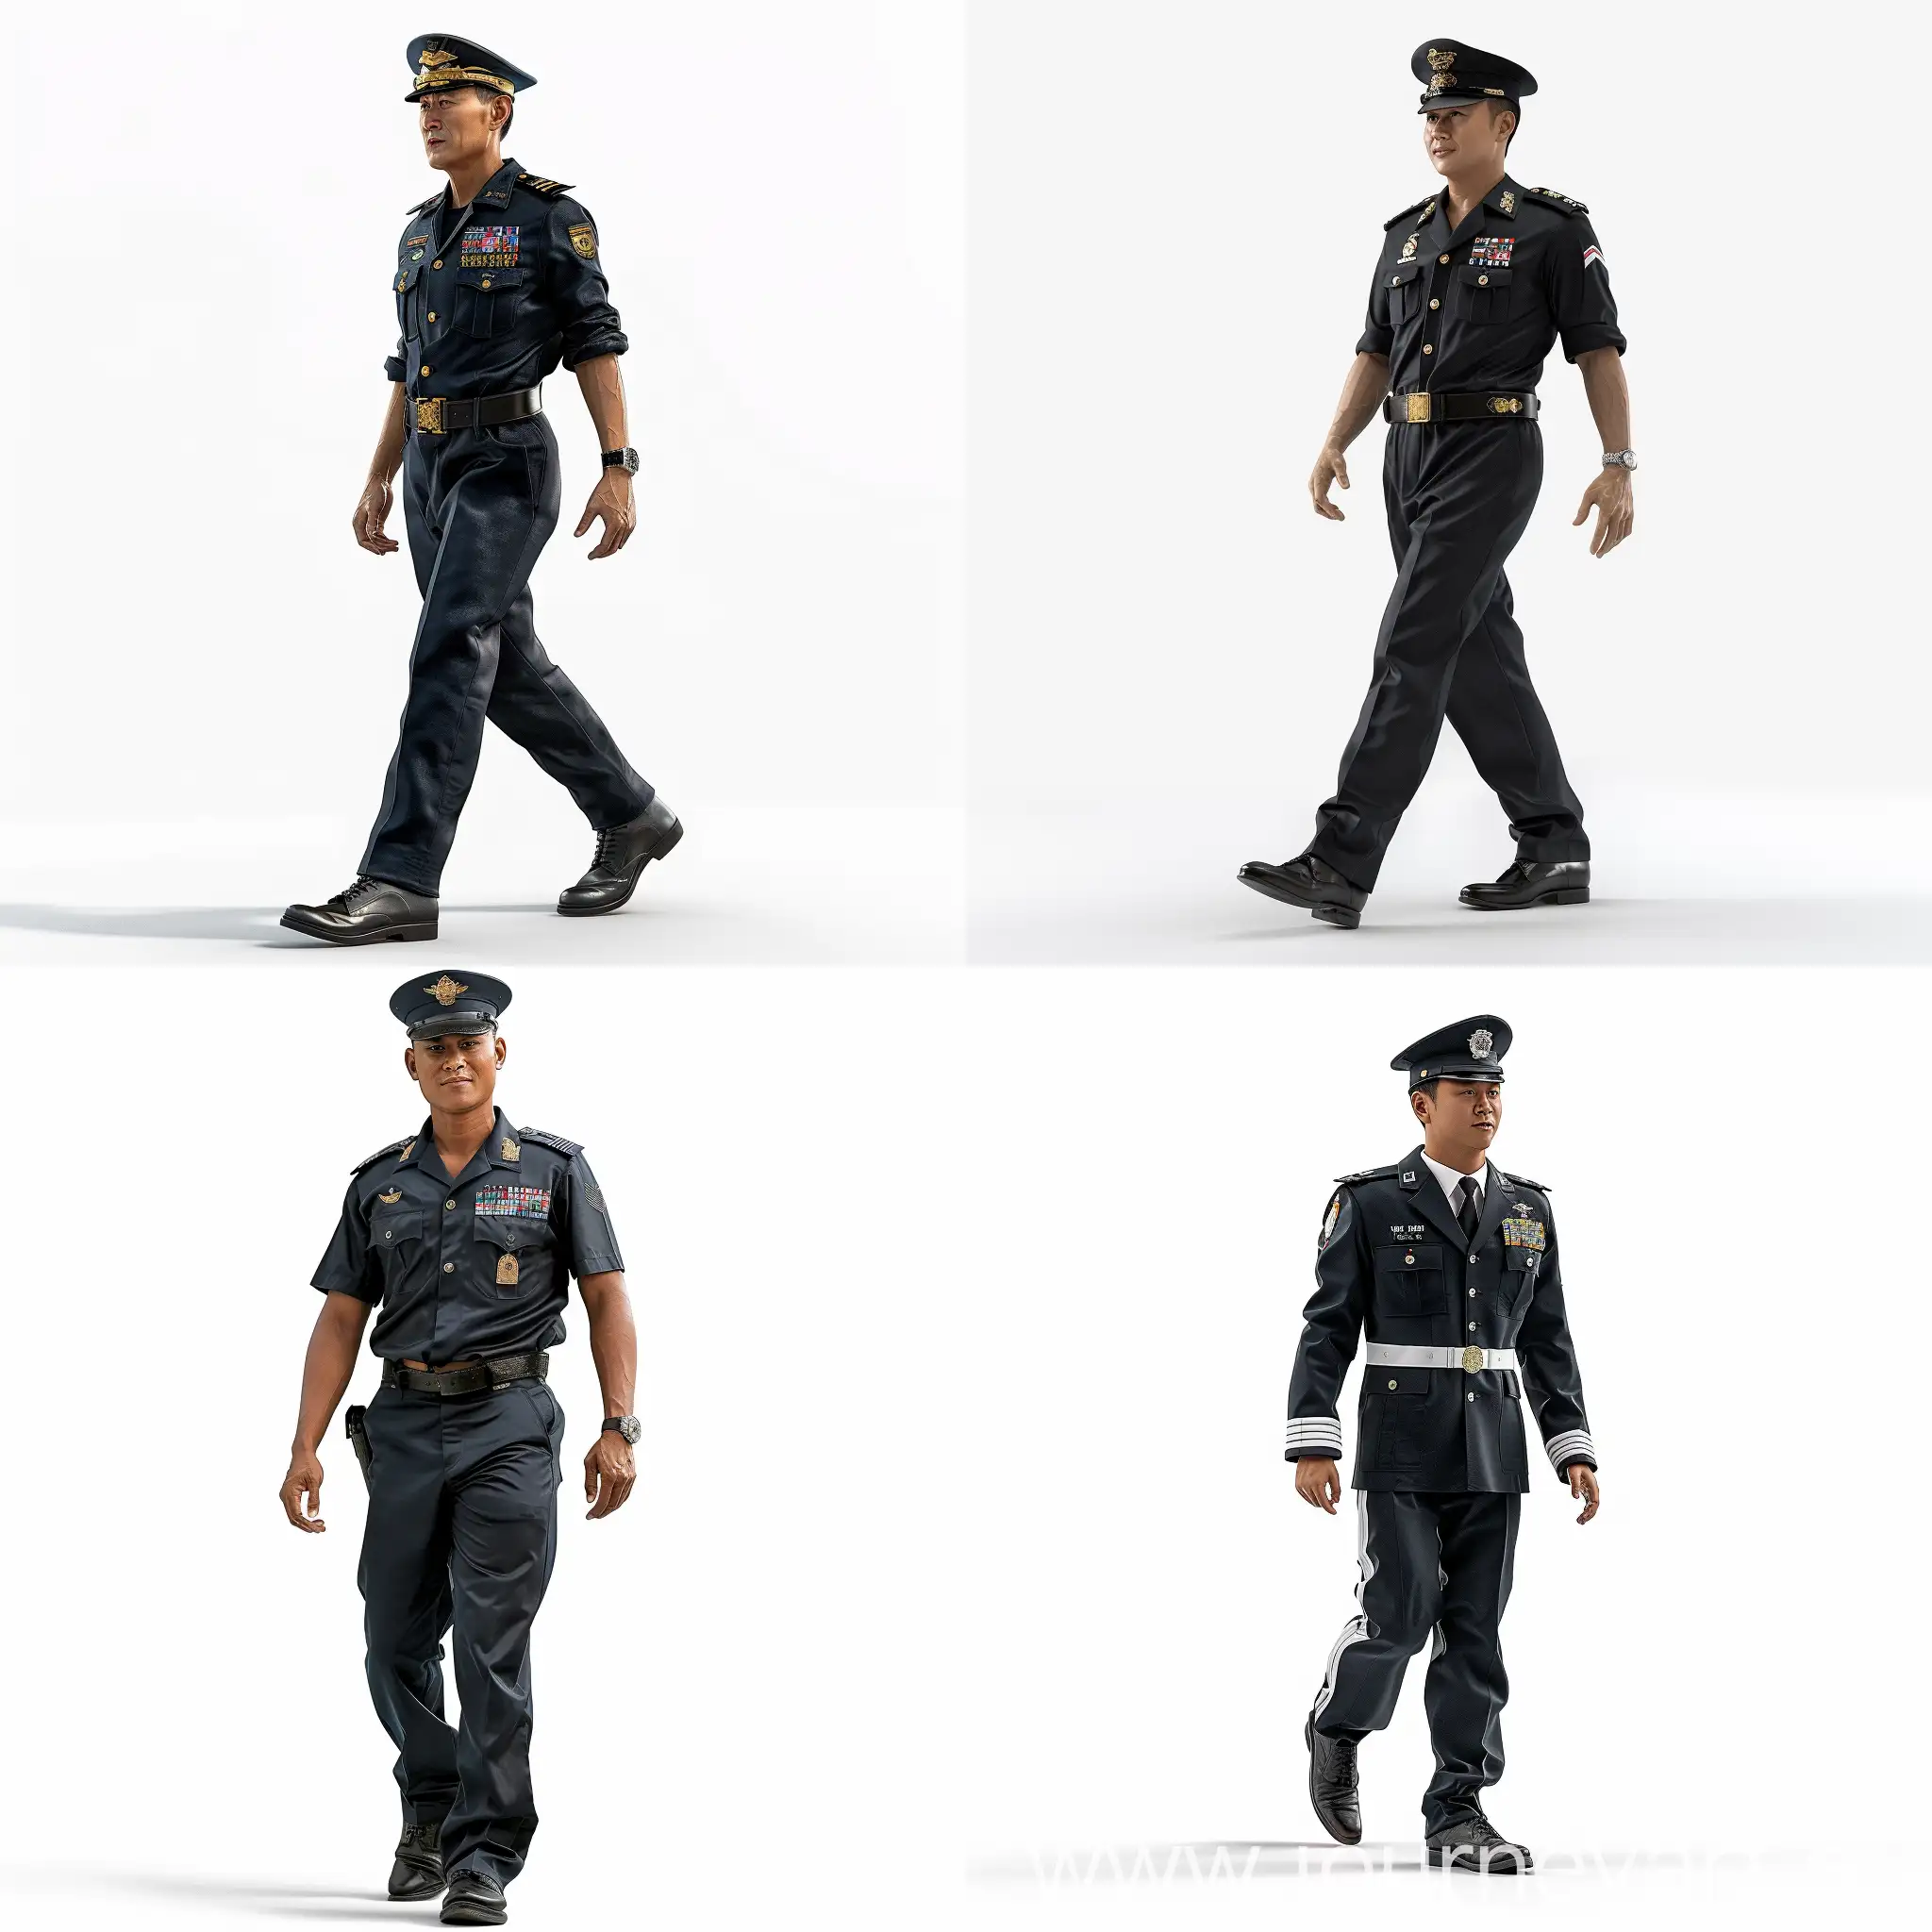 singapore navy man in navy uniform, walking, full body image head to toe, ultra detailed, photo realistic, talking